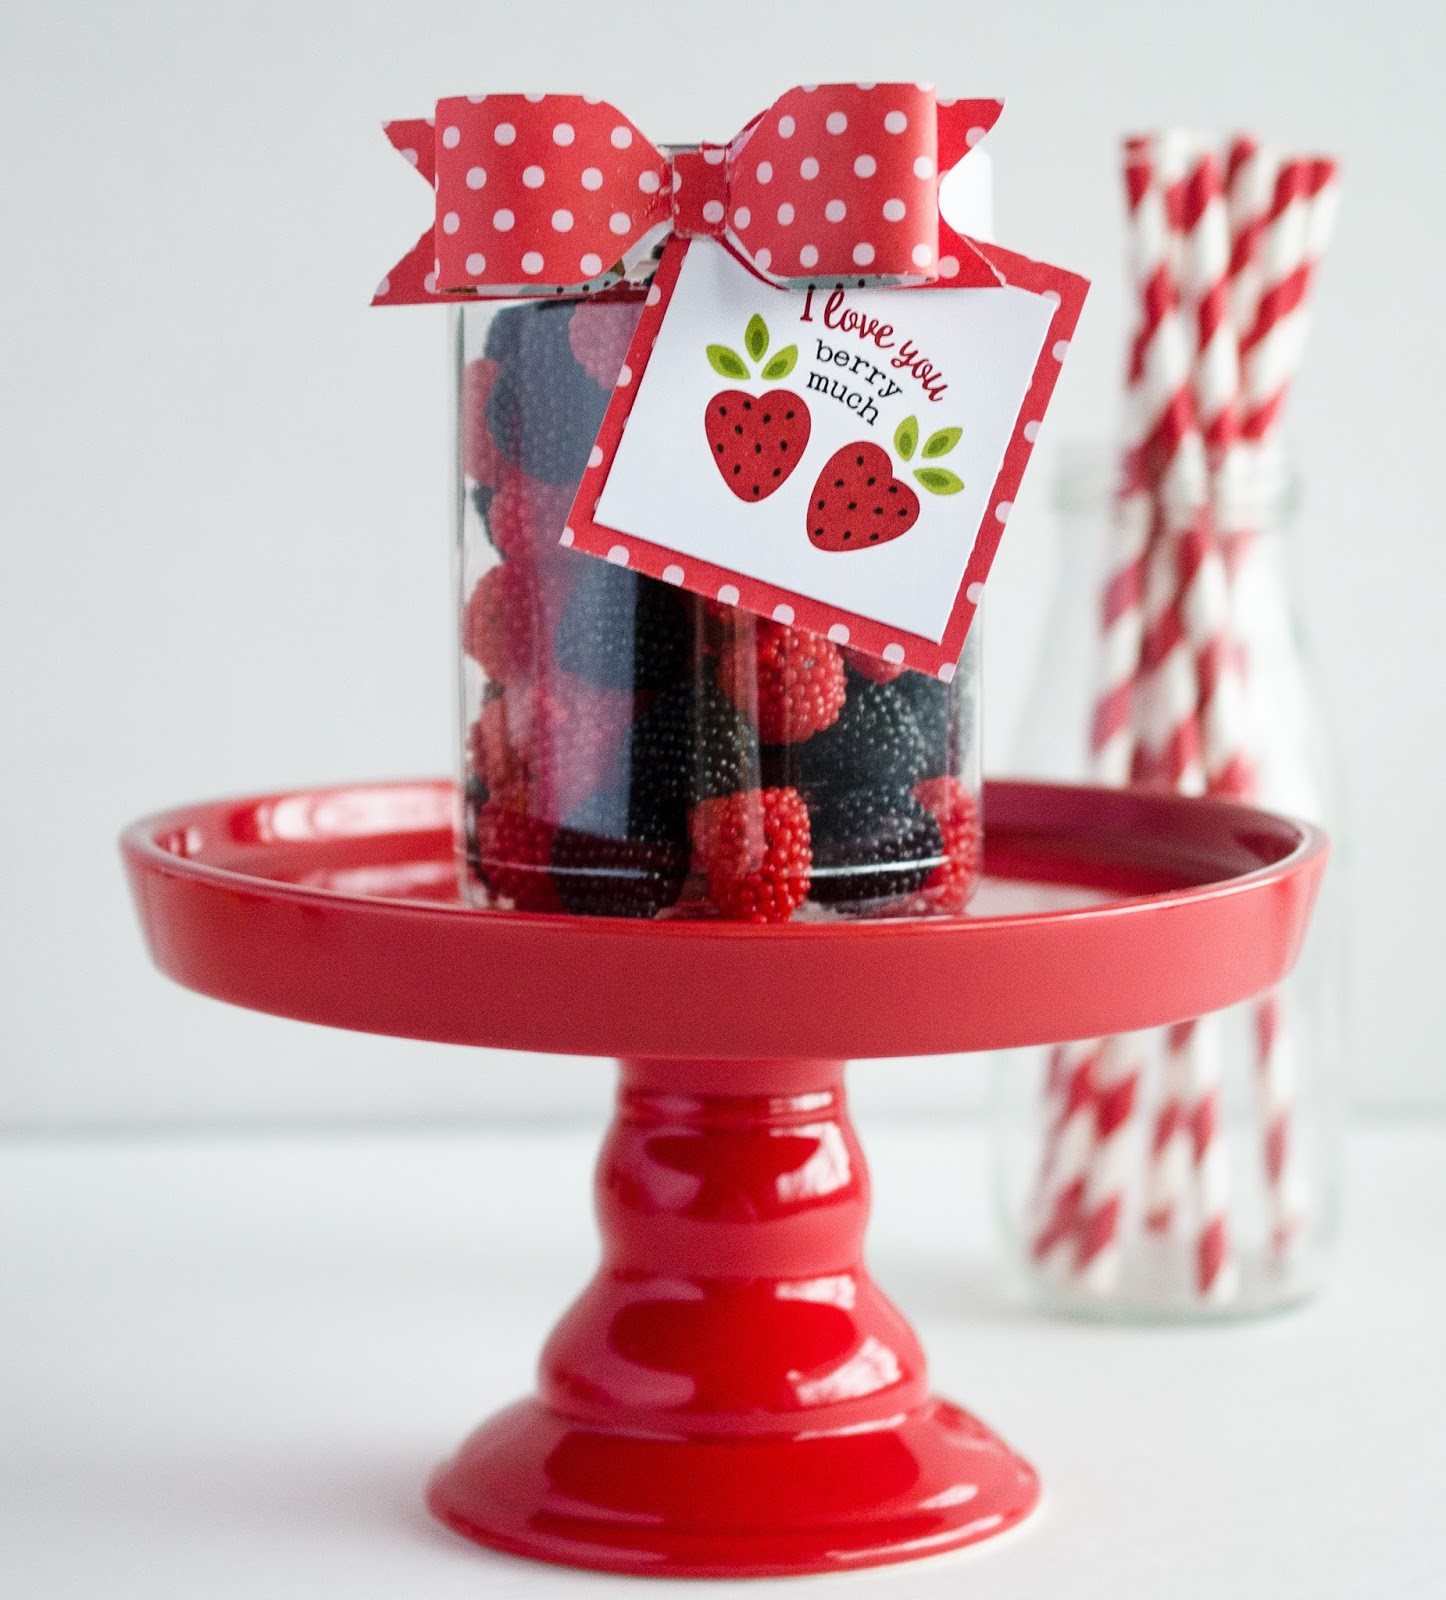 Best ideas about Cute Valentine Gift Ideas
. Save or Pin Sweet Valentine Gift Ideas Eighteen25 Now.